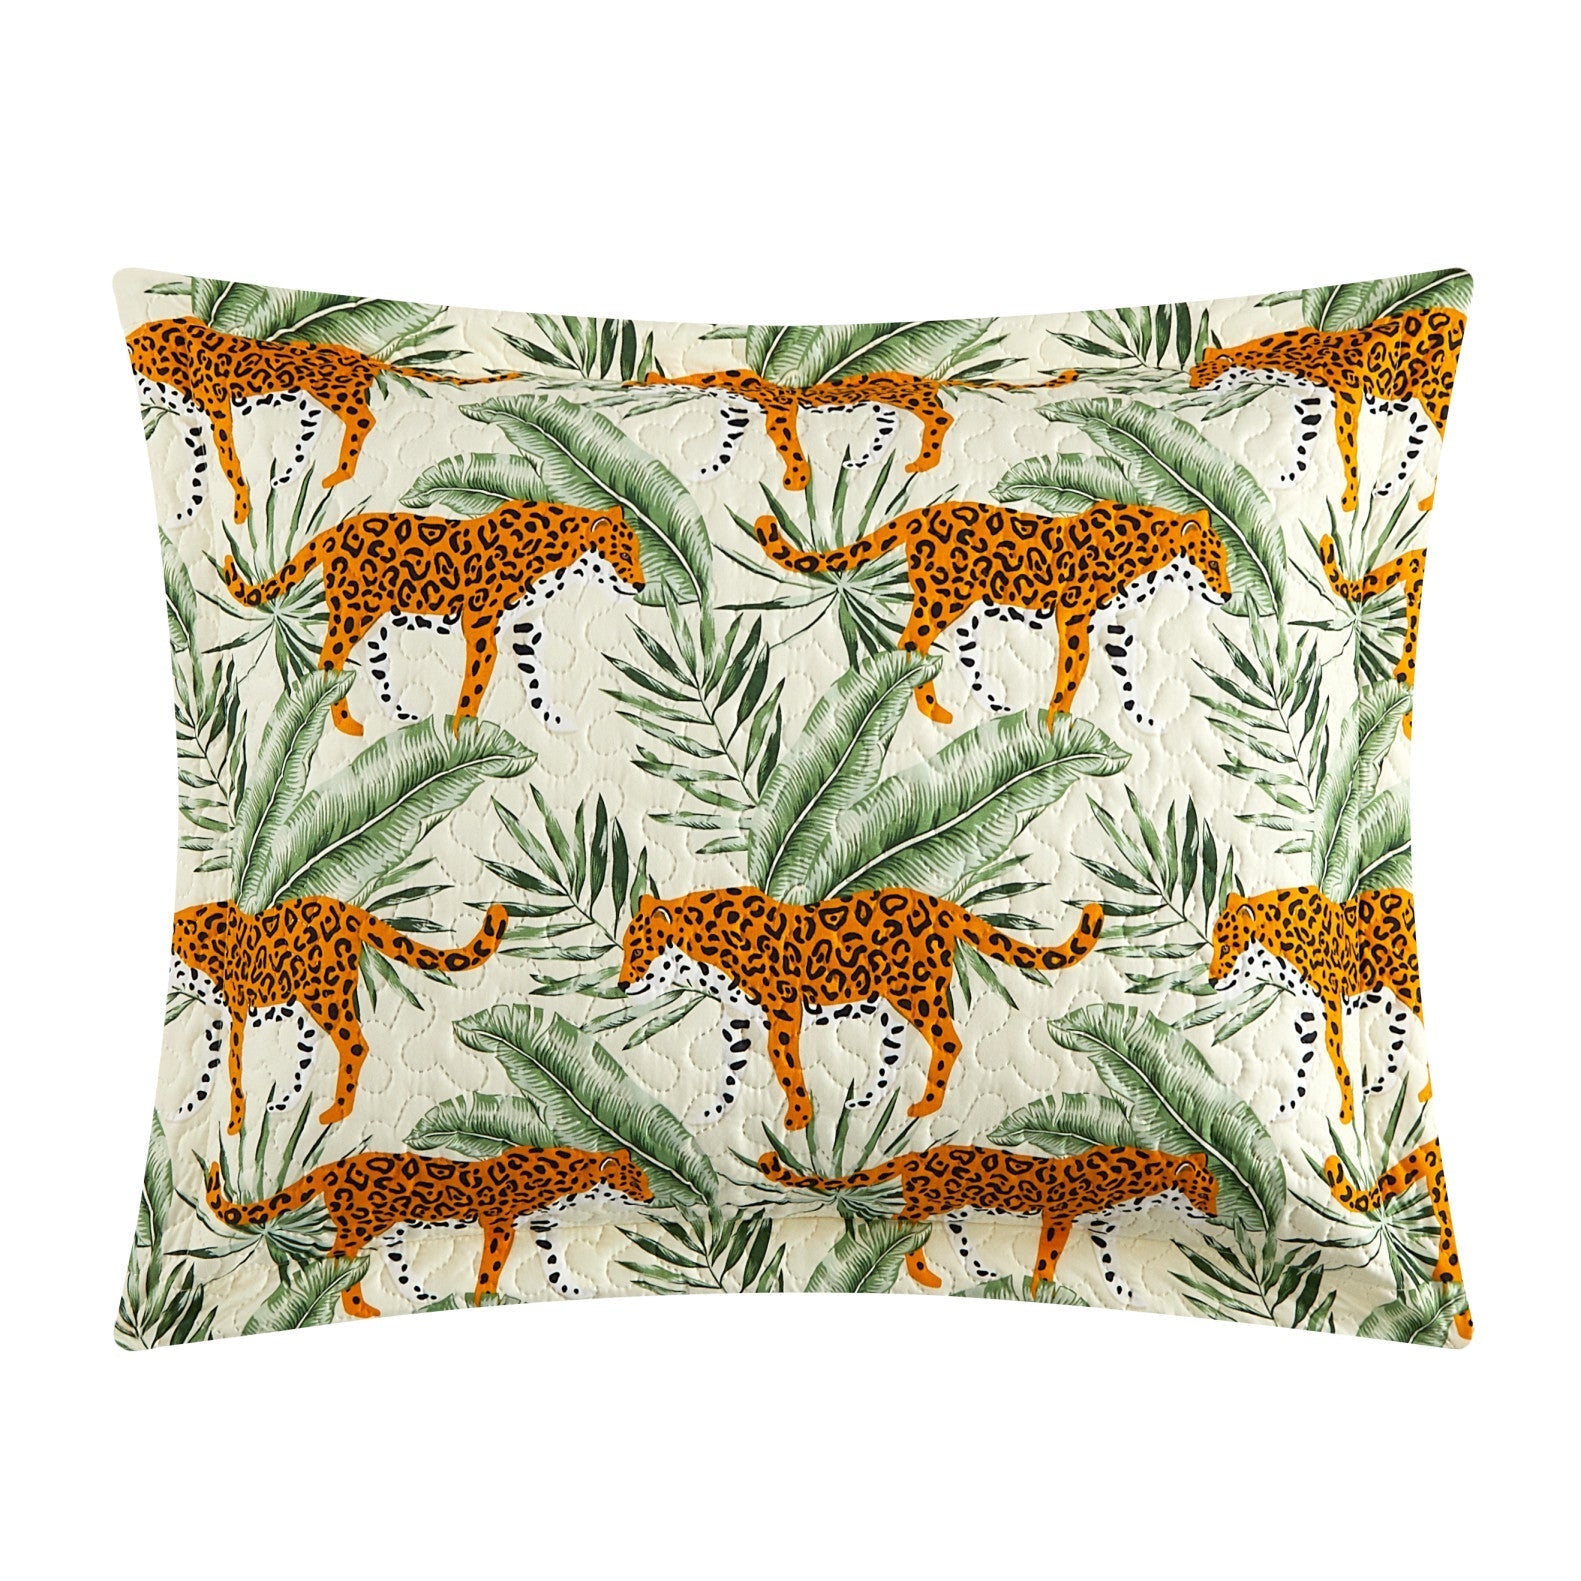 NY&C Home Wild Safari 3 Piece Jungle Print Quilt Set 